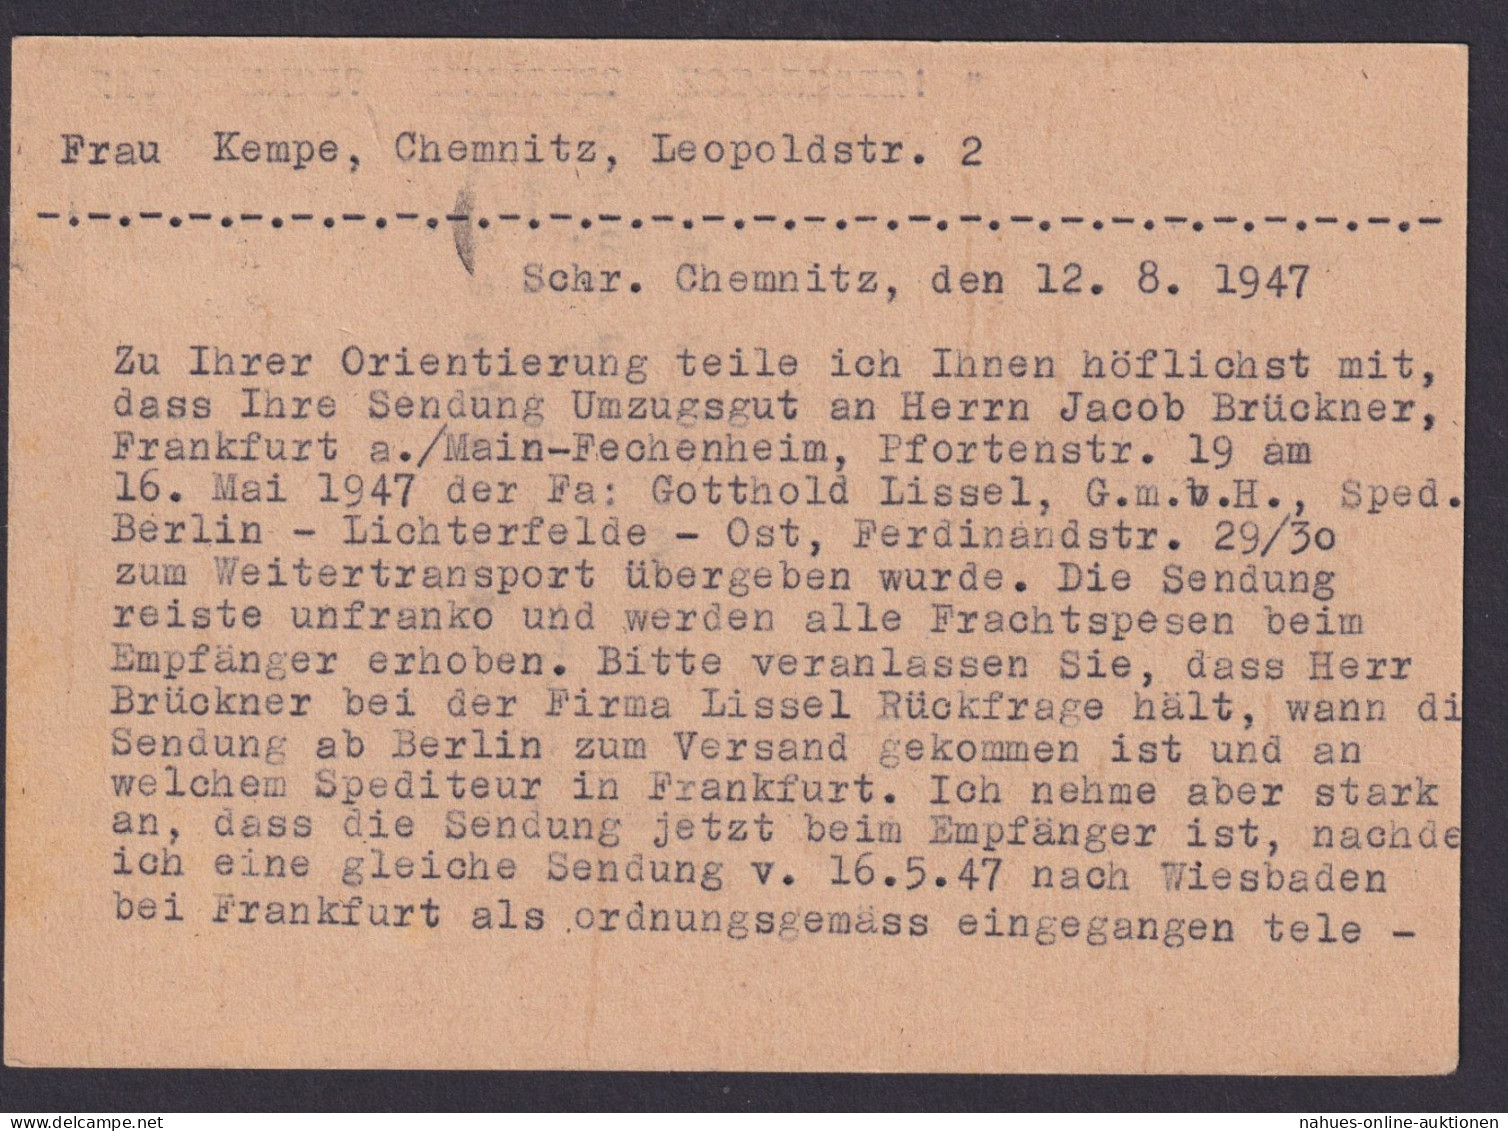 All. Besetzung EF 918 Postkarte Chemnitz Fuhrwesen Mäbeltransporte Gustav Dröge - Other & Unclassified